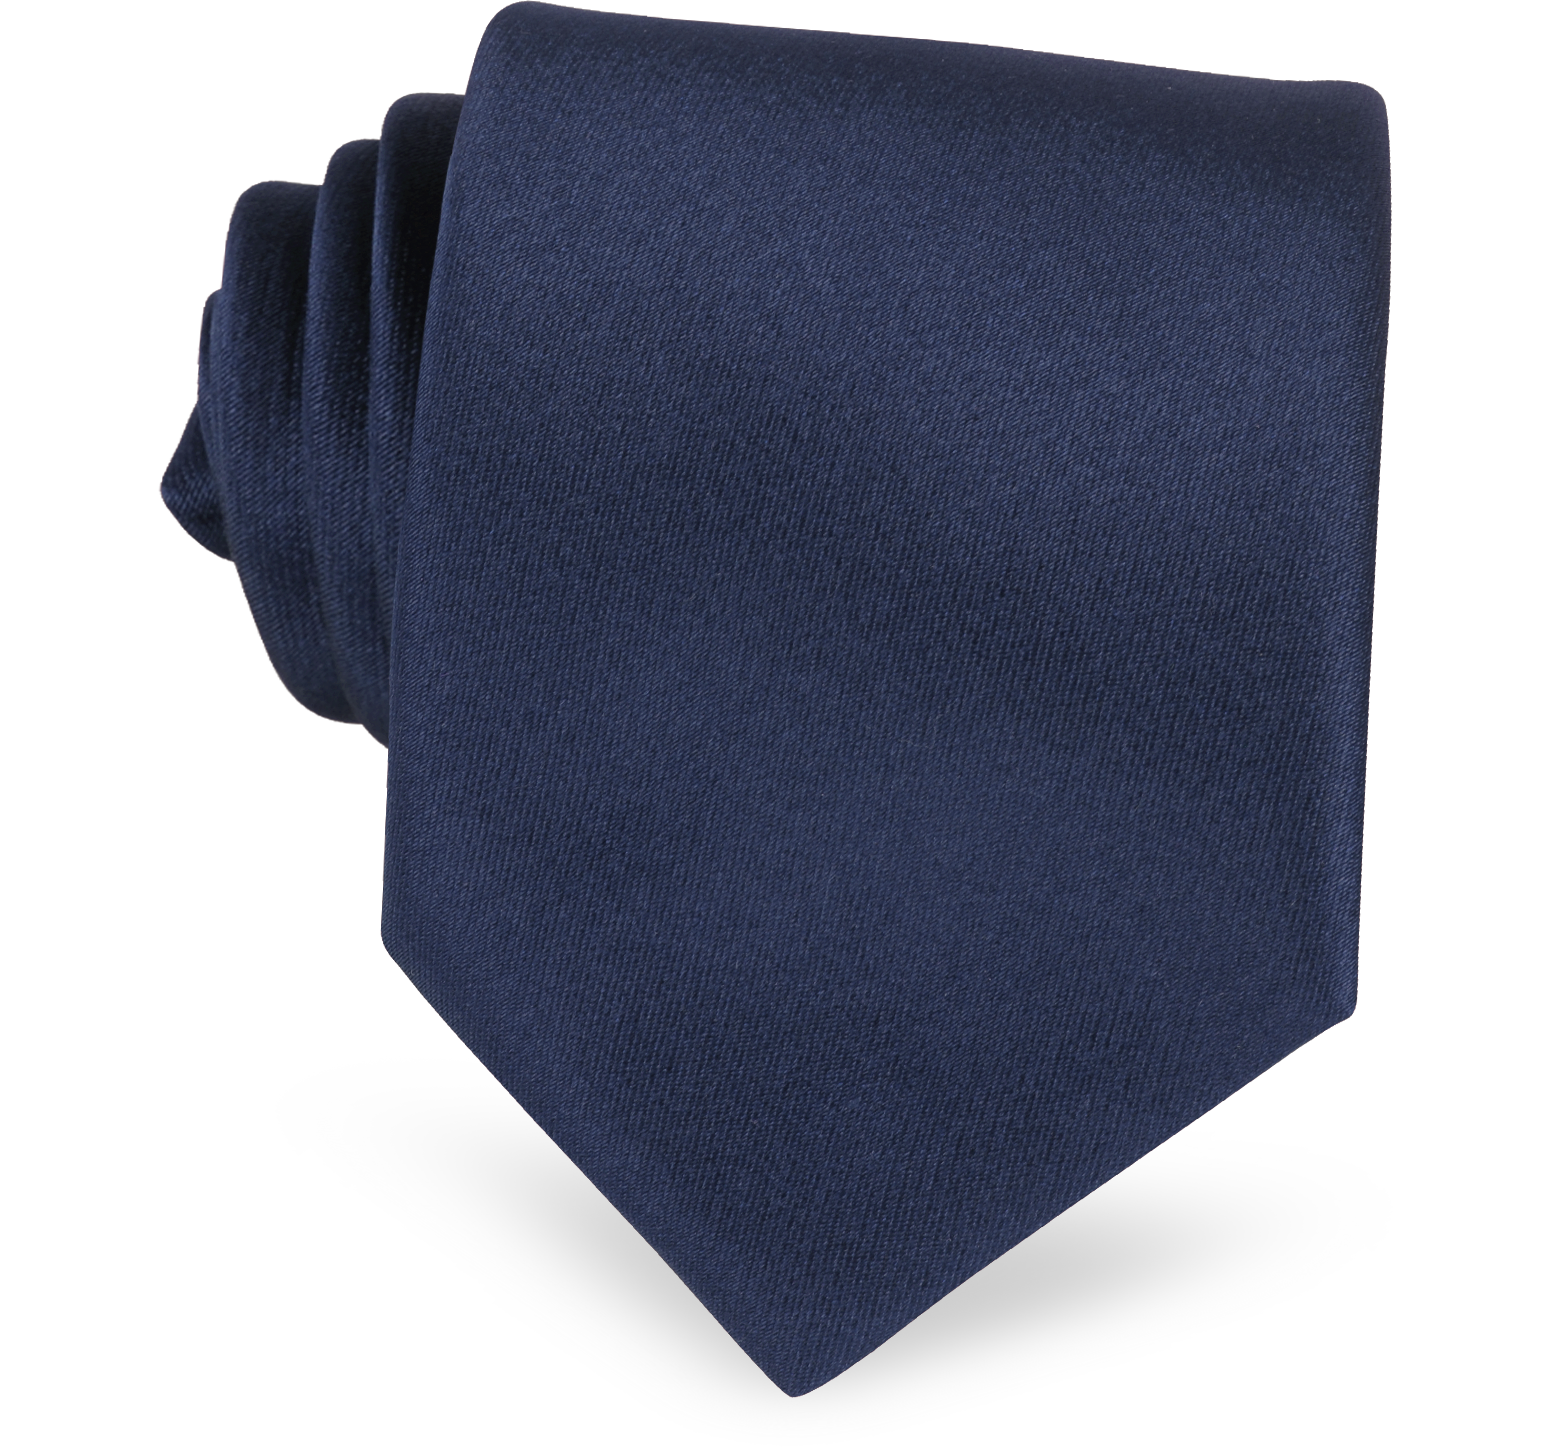 Forzieri Solid Dark Blue Extra-Long Tie at FORZIERI Canada